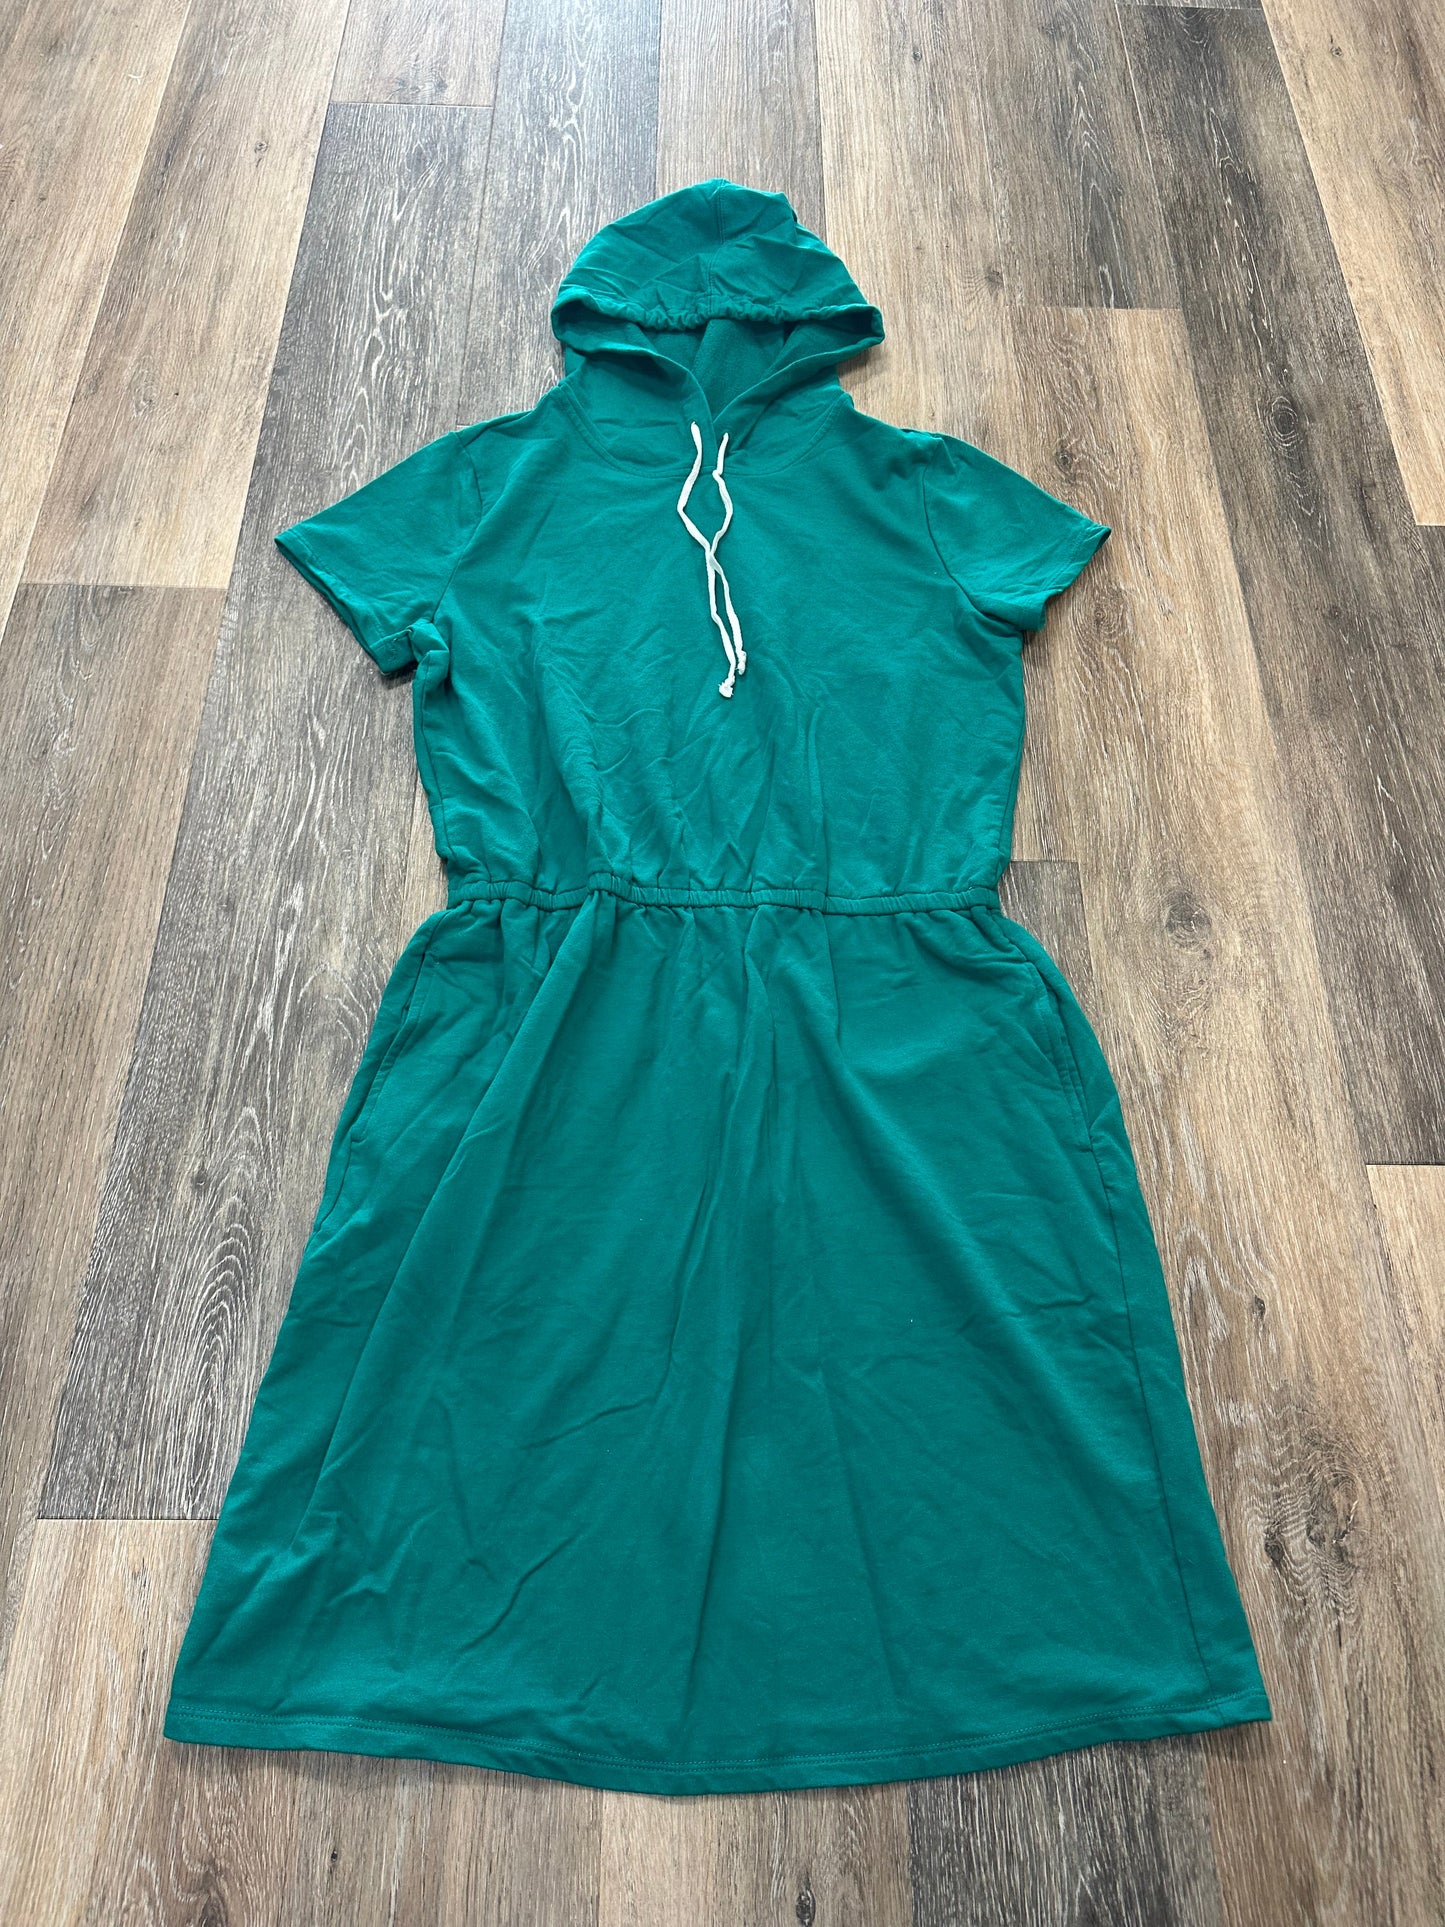 Green Dress Designer Jason Wu, Size S